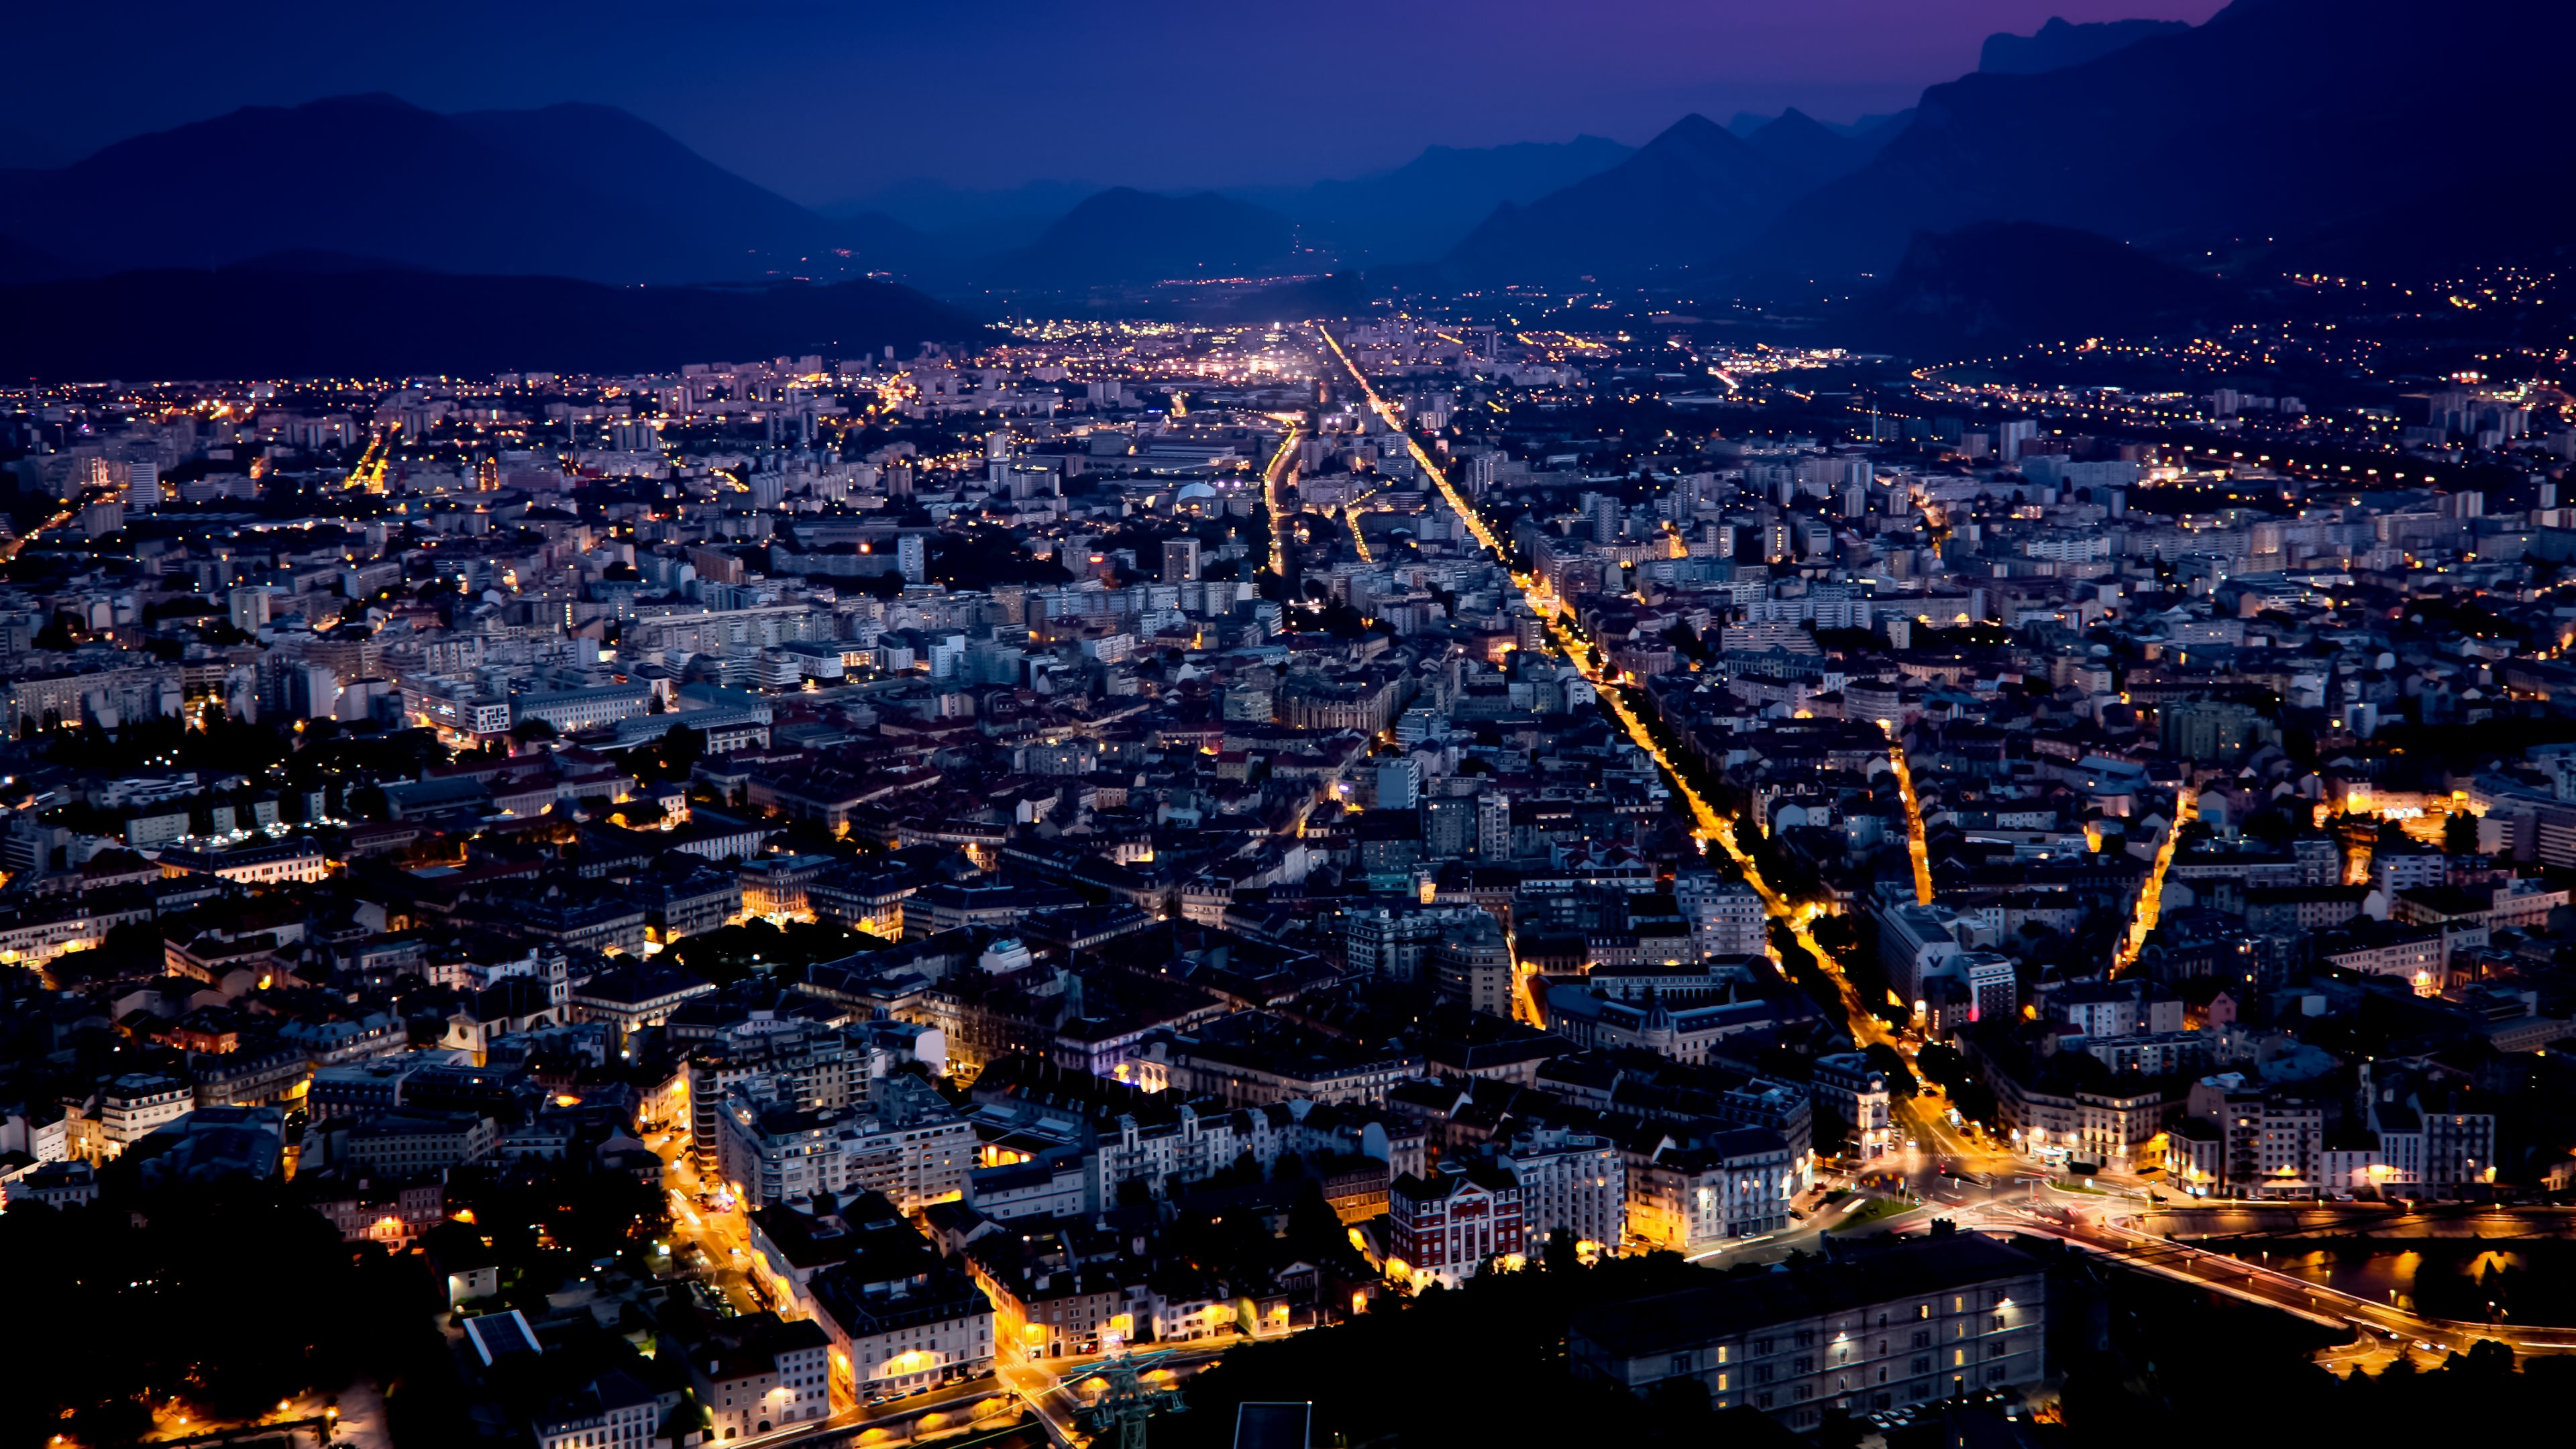 Grenoble 4k Ultra HD Wallpaper Background Image Id